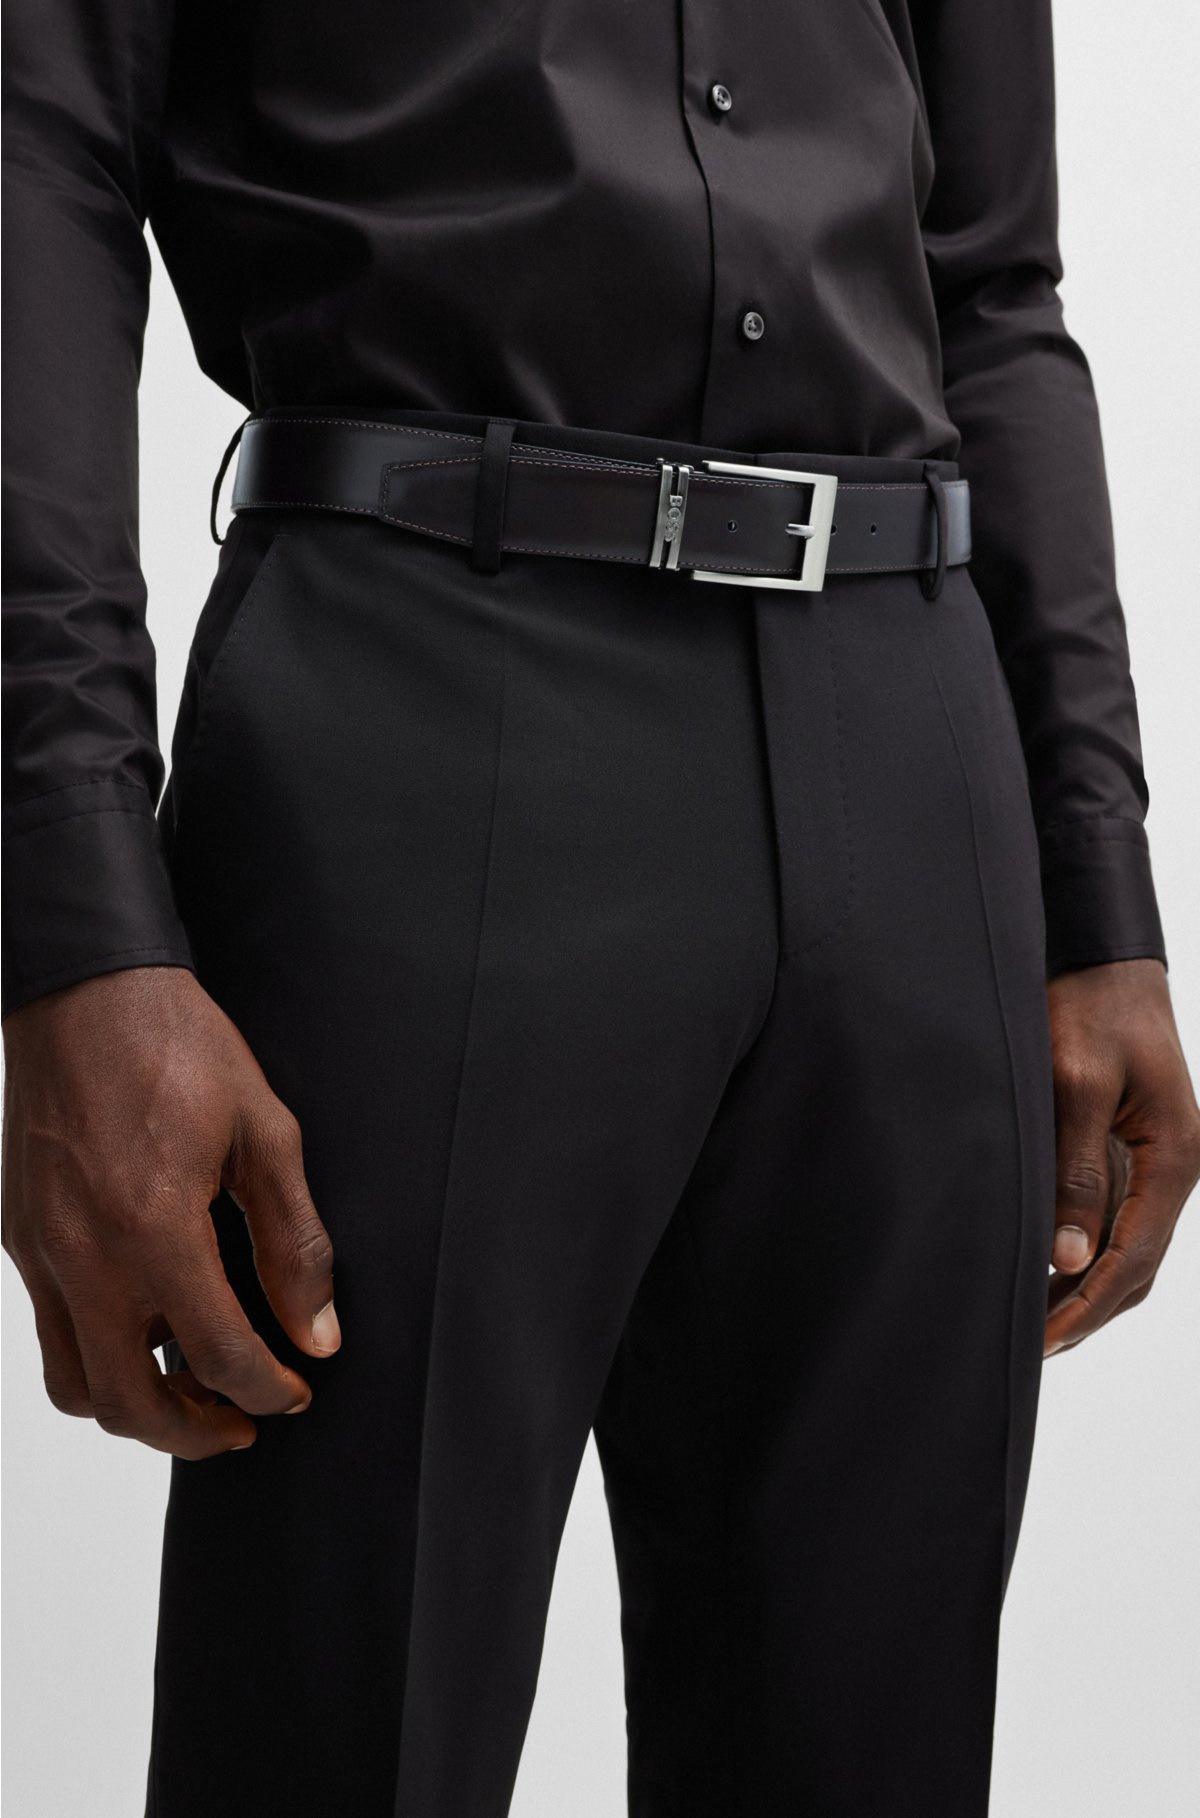 BOSS - Italian-leather reversible belt with branded keeper